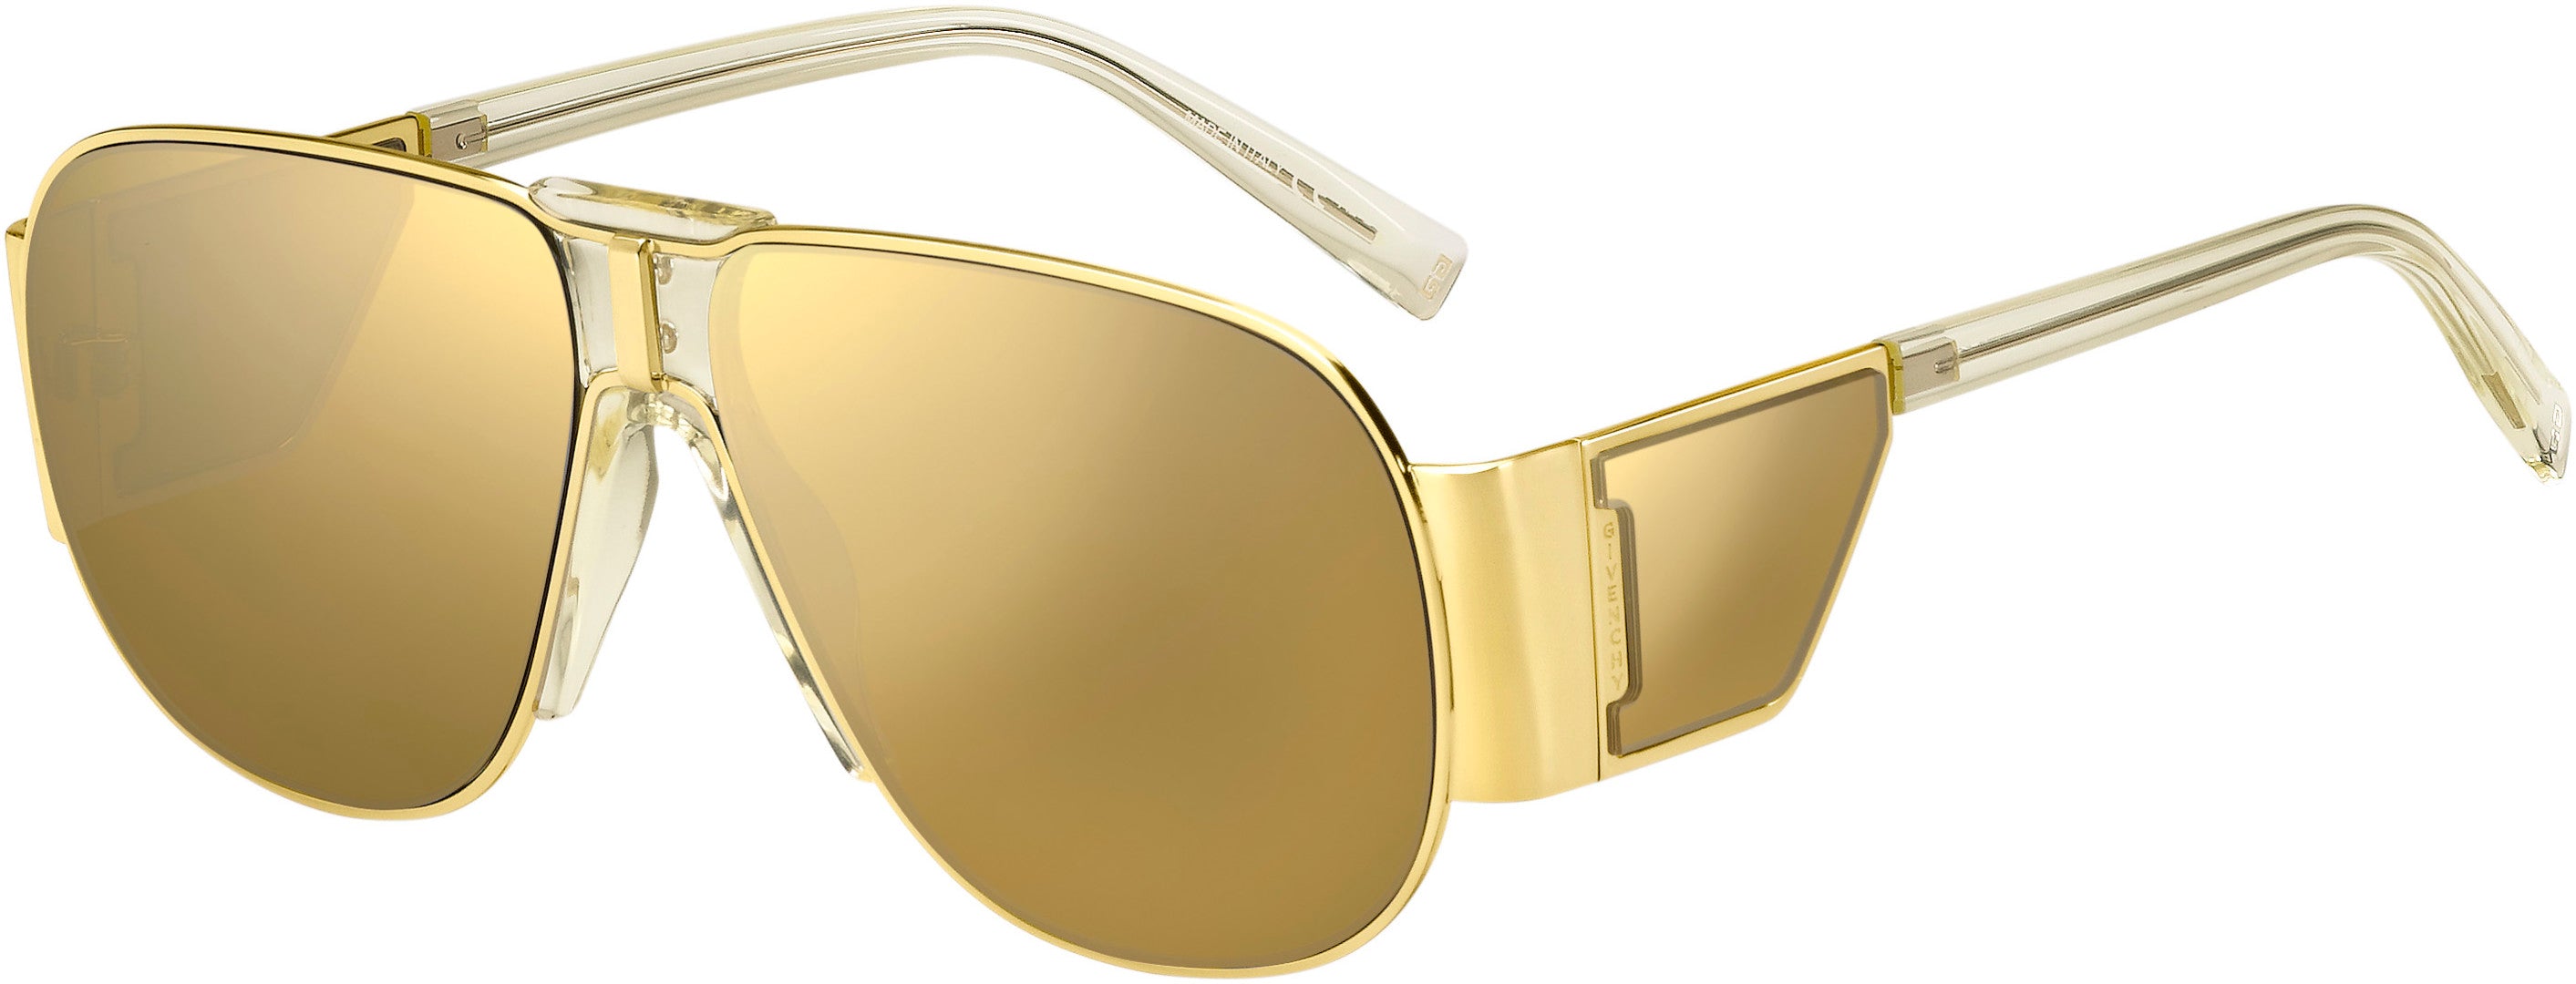  Givenchy 7164/S Rectangular Sunglasses 0J5G-0J5G  Gold (T4 Silver Mirror)